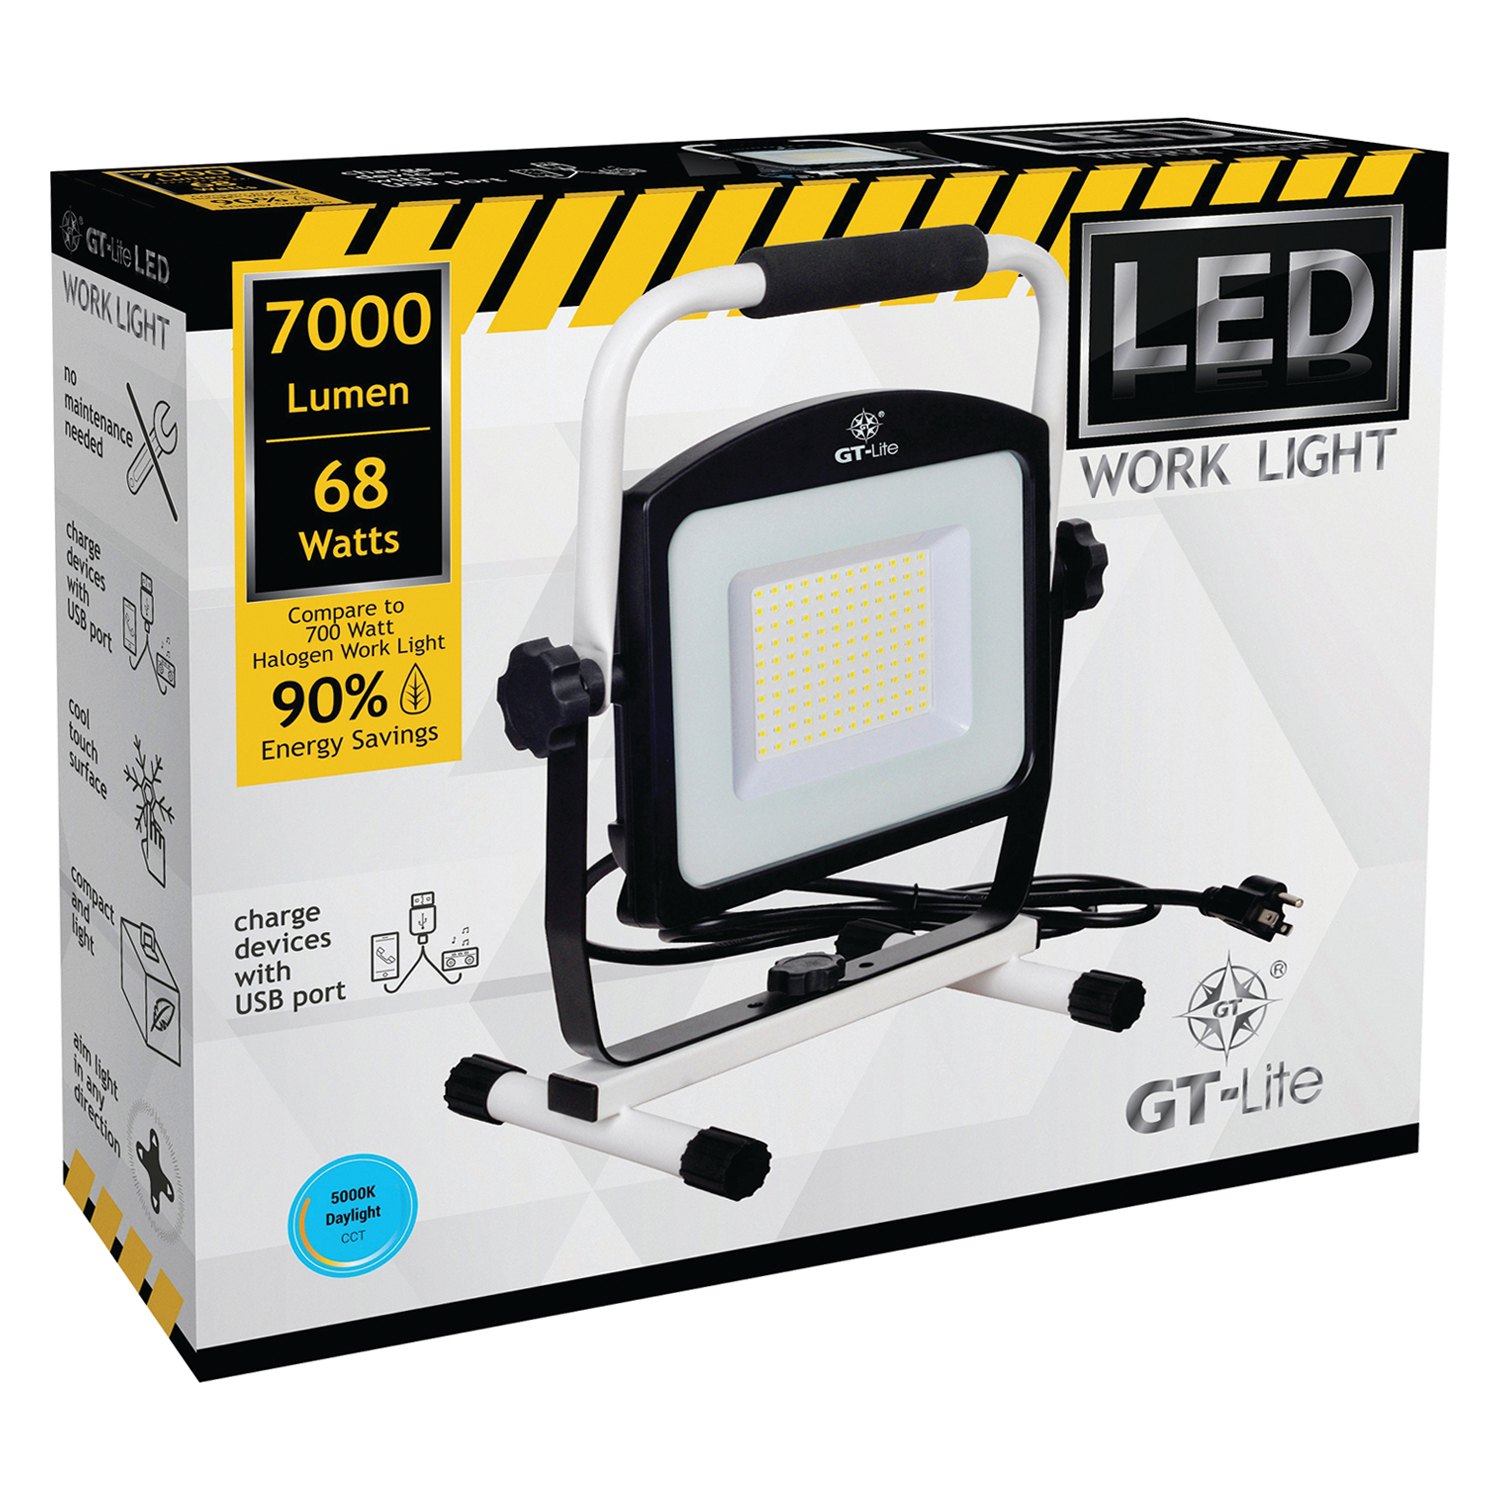 GT-Lite Smart Electrician LED Portable Work Light